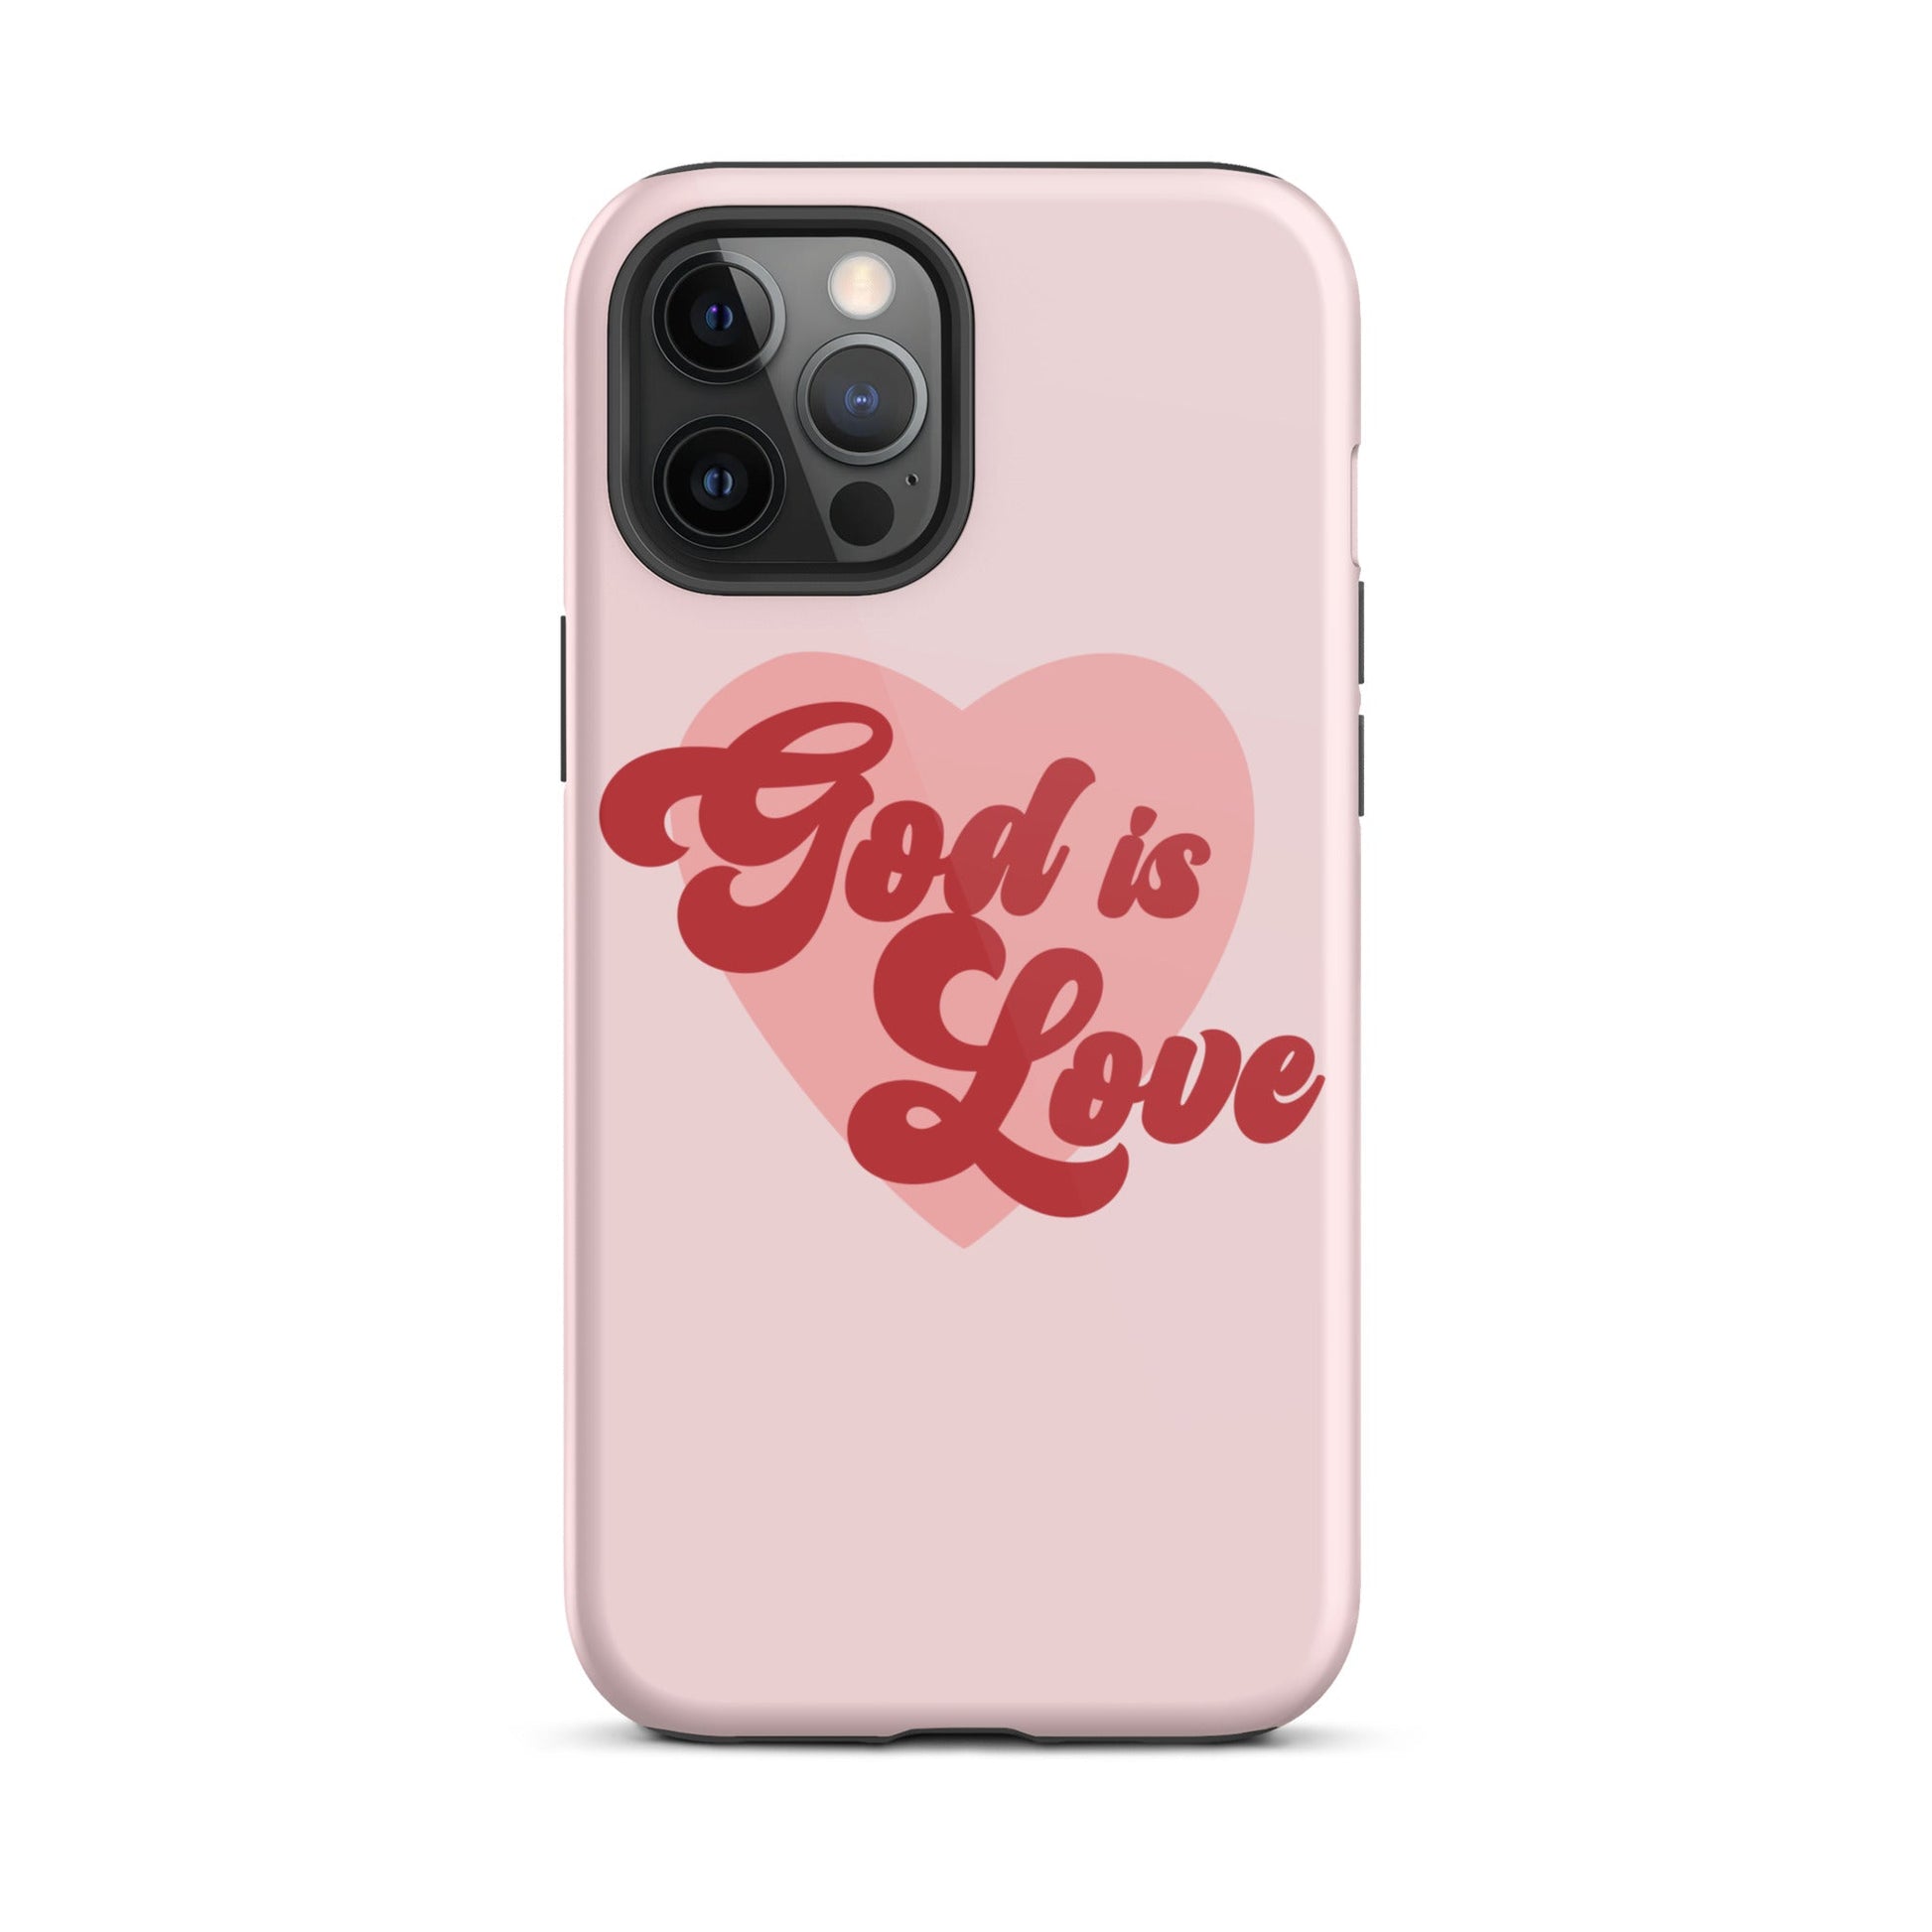 God is Love - Whisper - Tough iPhone case for iPhone 11 Pro Max & Mini, 12 Pro Max & Mini, 13 Pro Max & Mini, 14 Pro Max & Mini - Creation Awaits